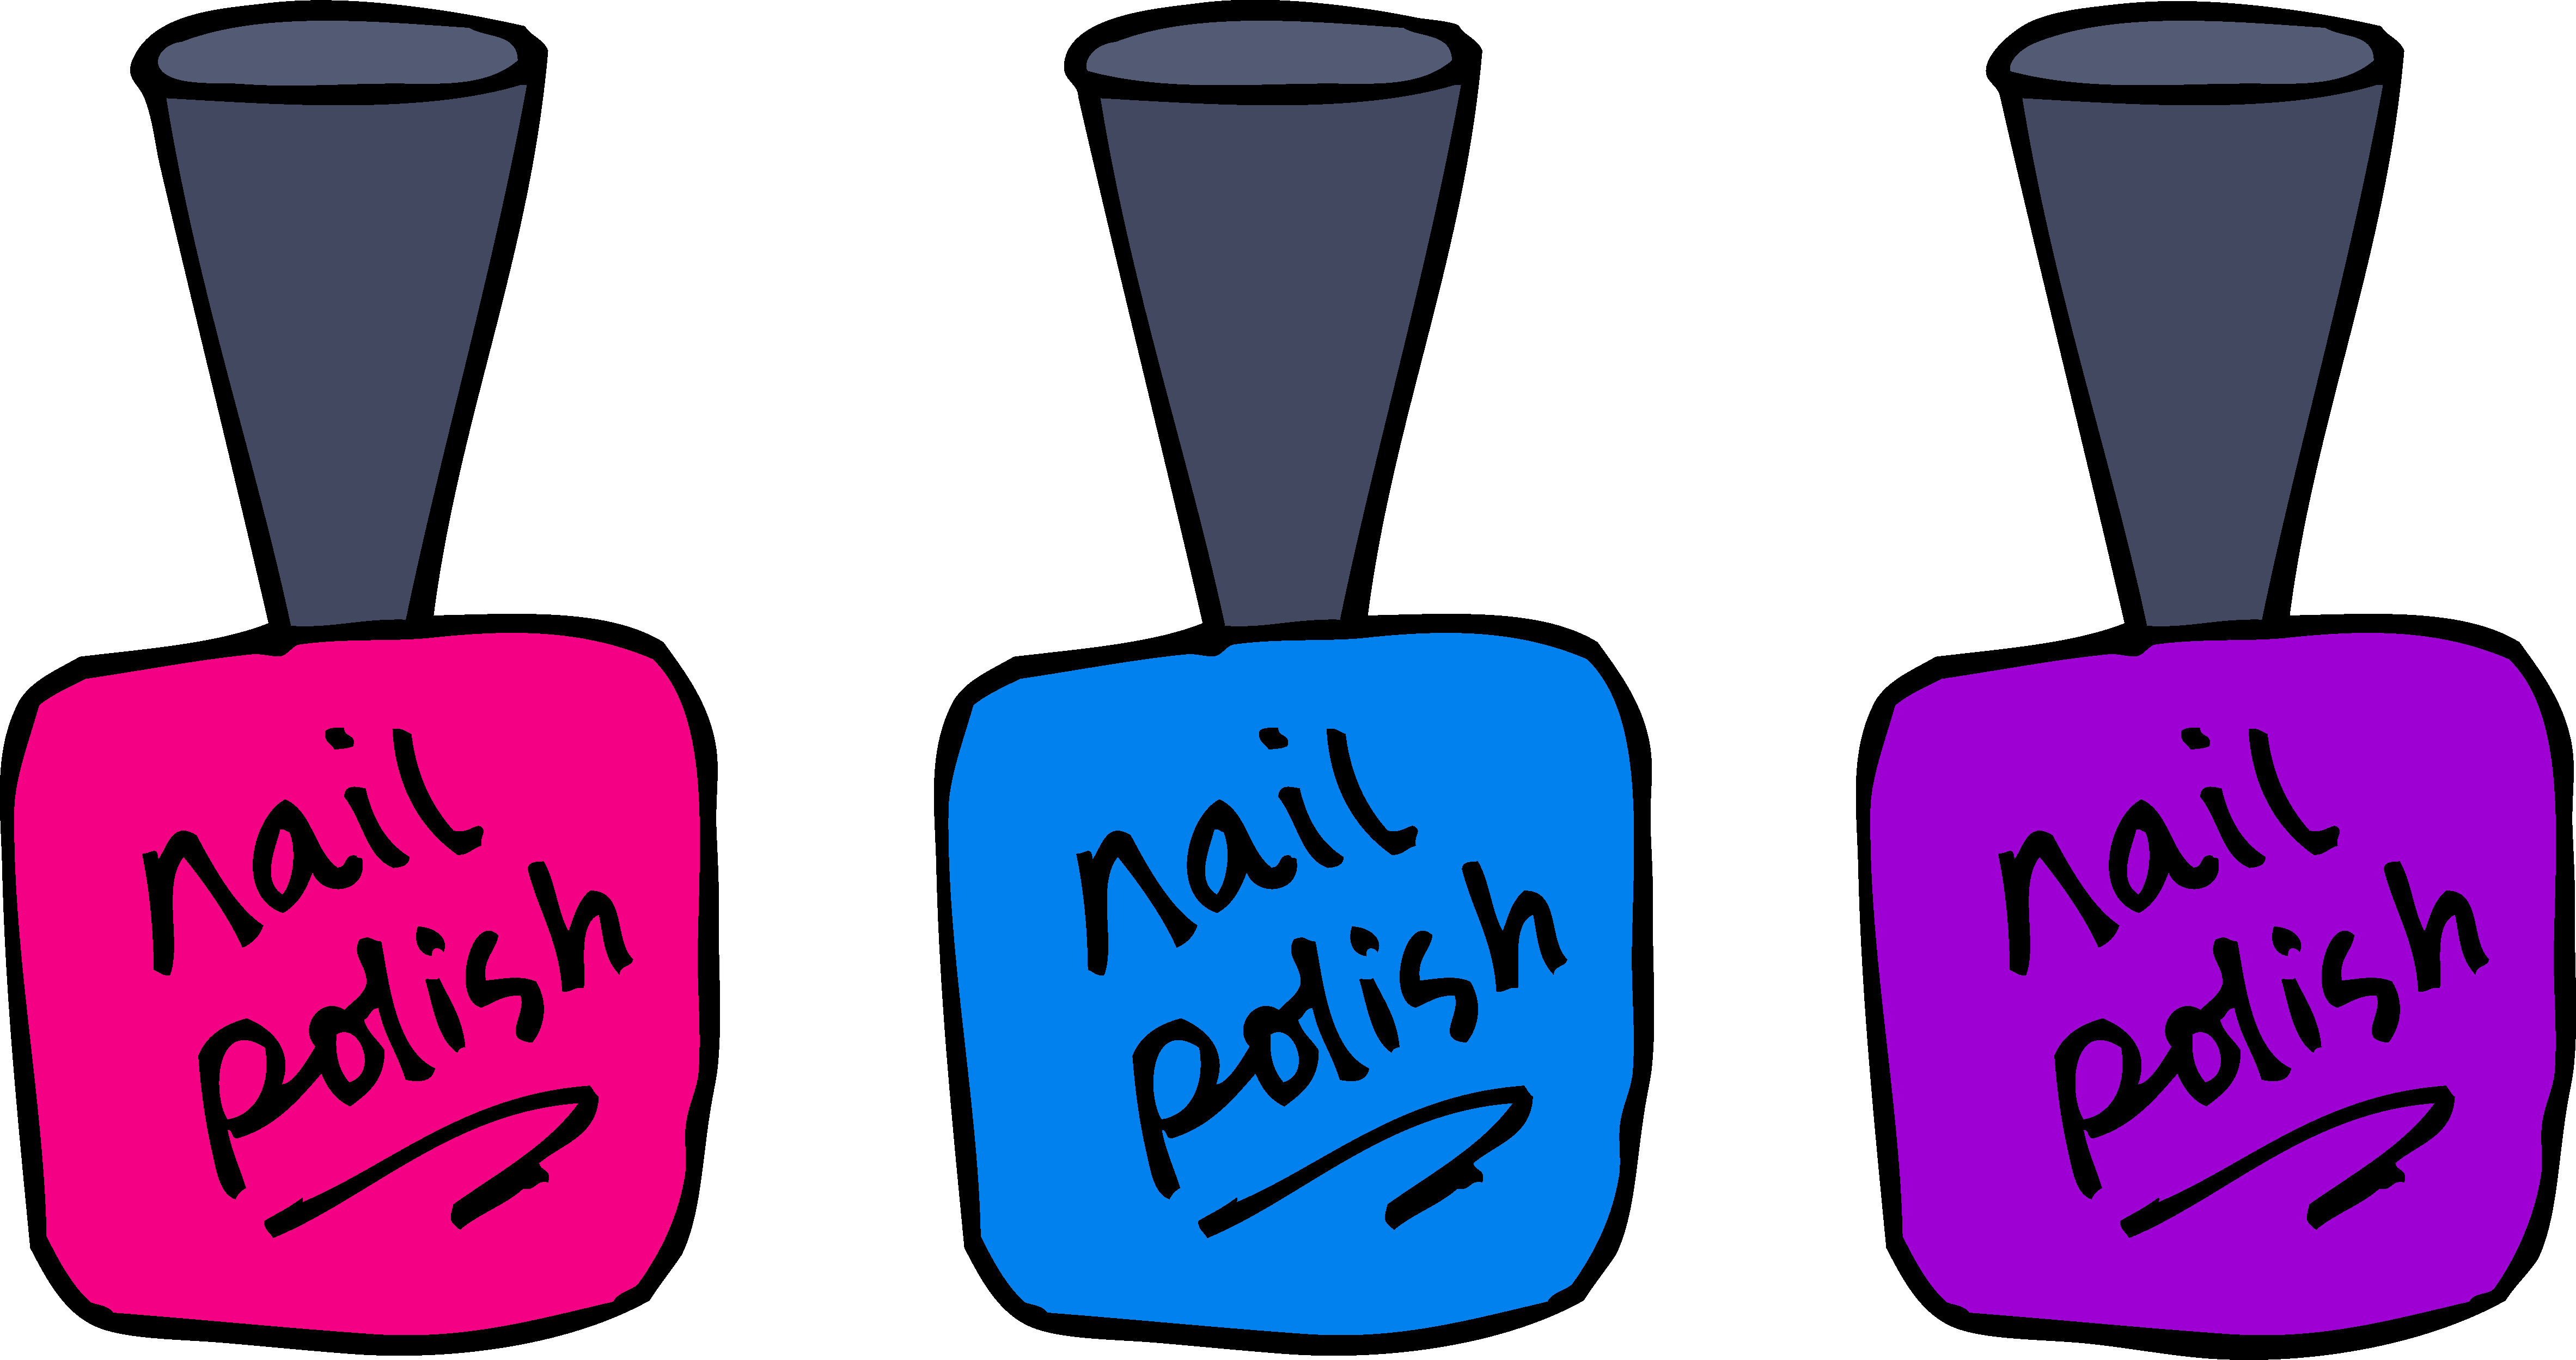 Nail Salon Clip Art - wide 9